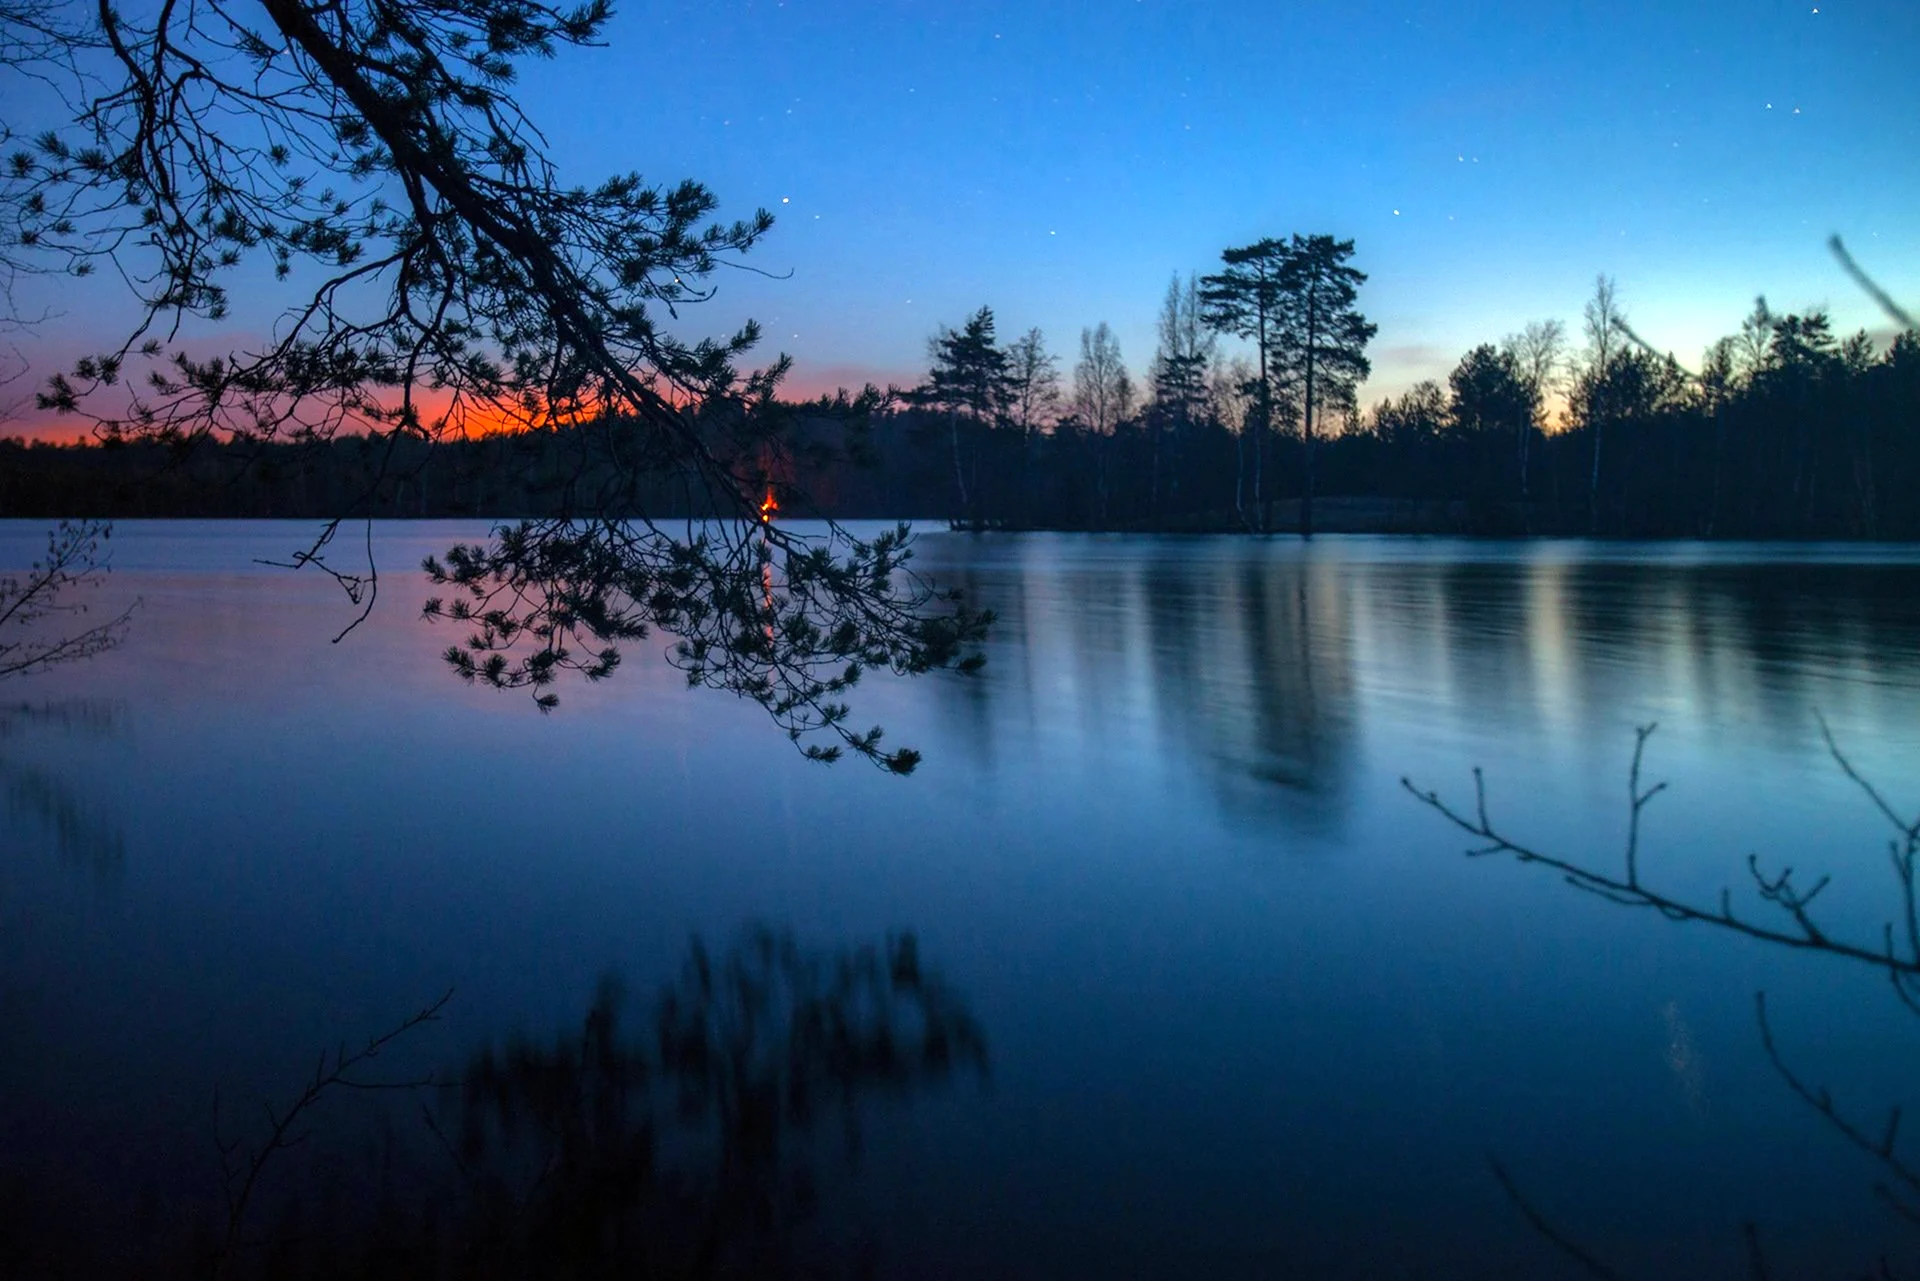 Night lake. Горнешное озеро Бологое. Озеро Кафтино. Ночное озеро Кафтино. Озеро ночью.